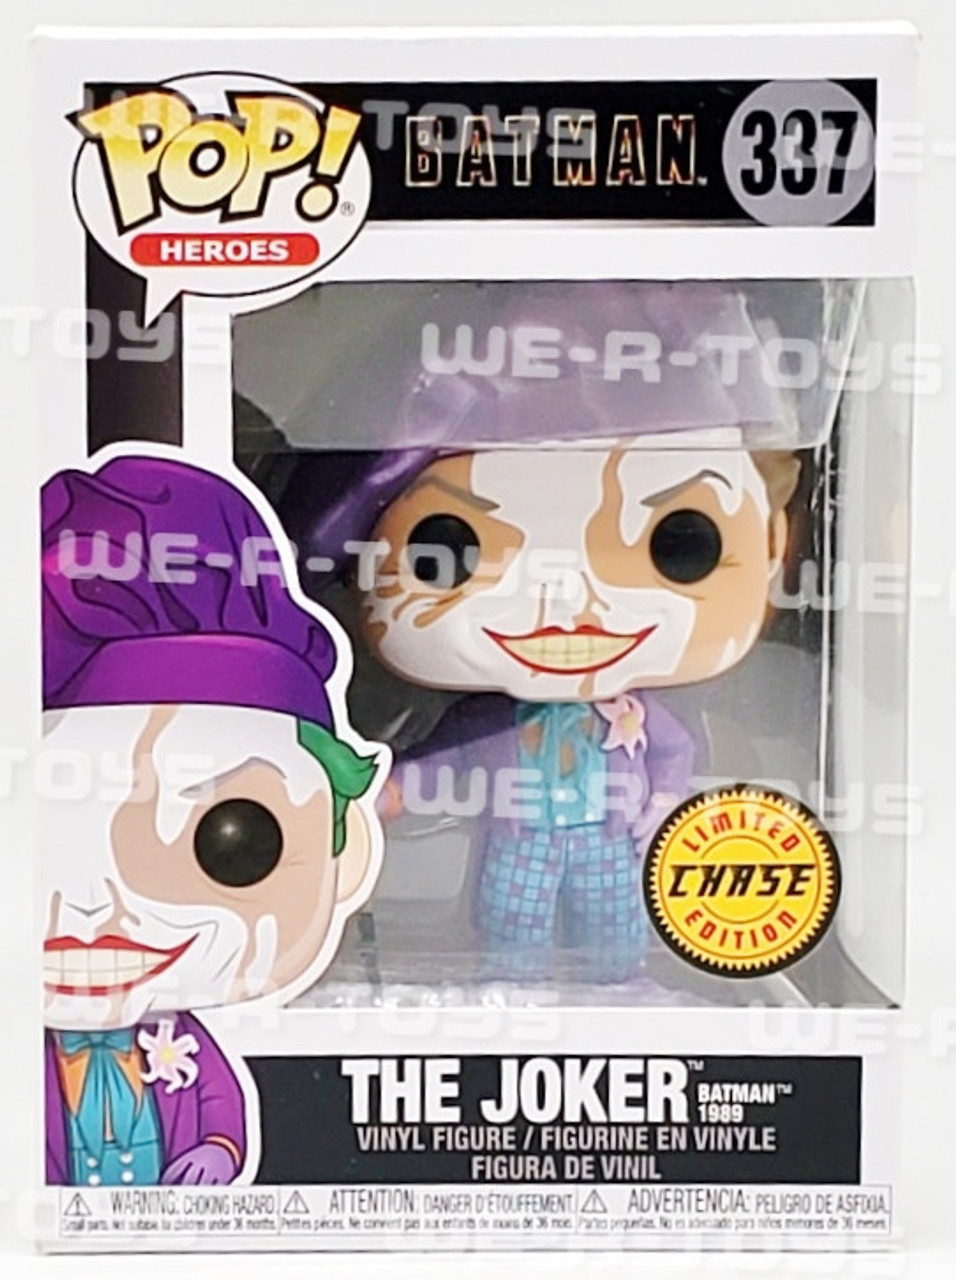 Funko Pop The Joker DC Batman 1989